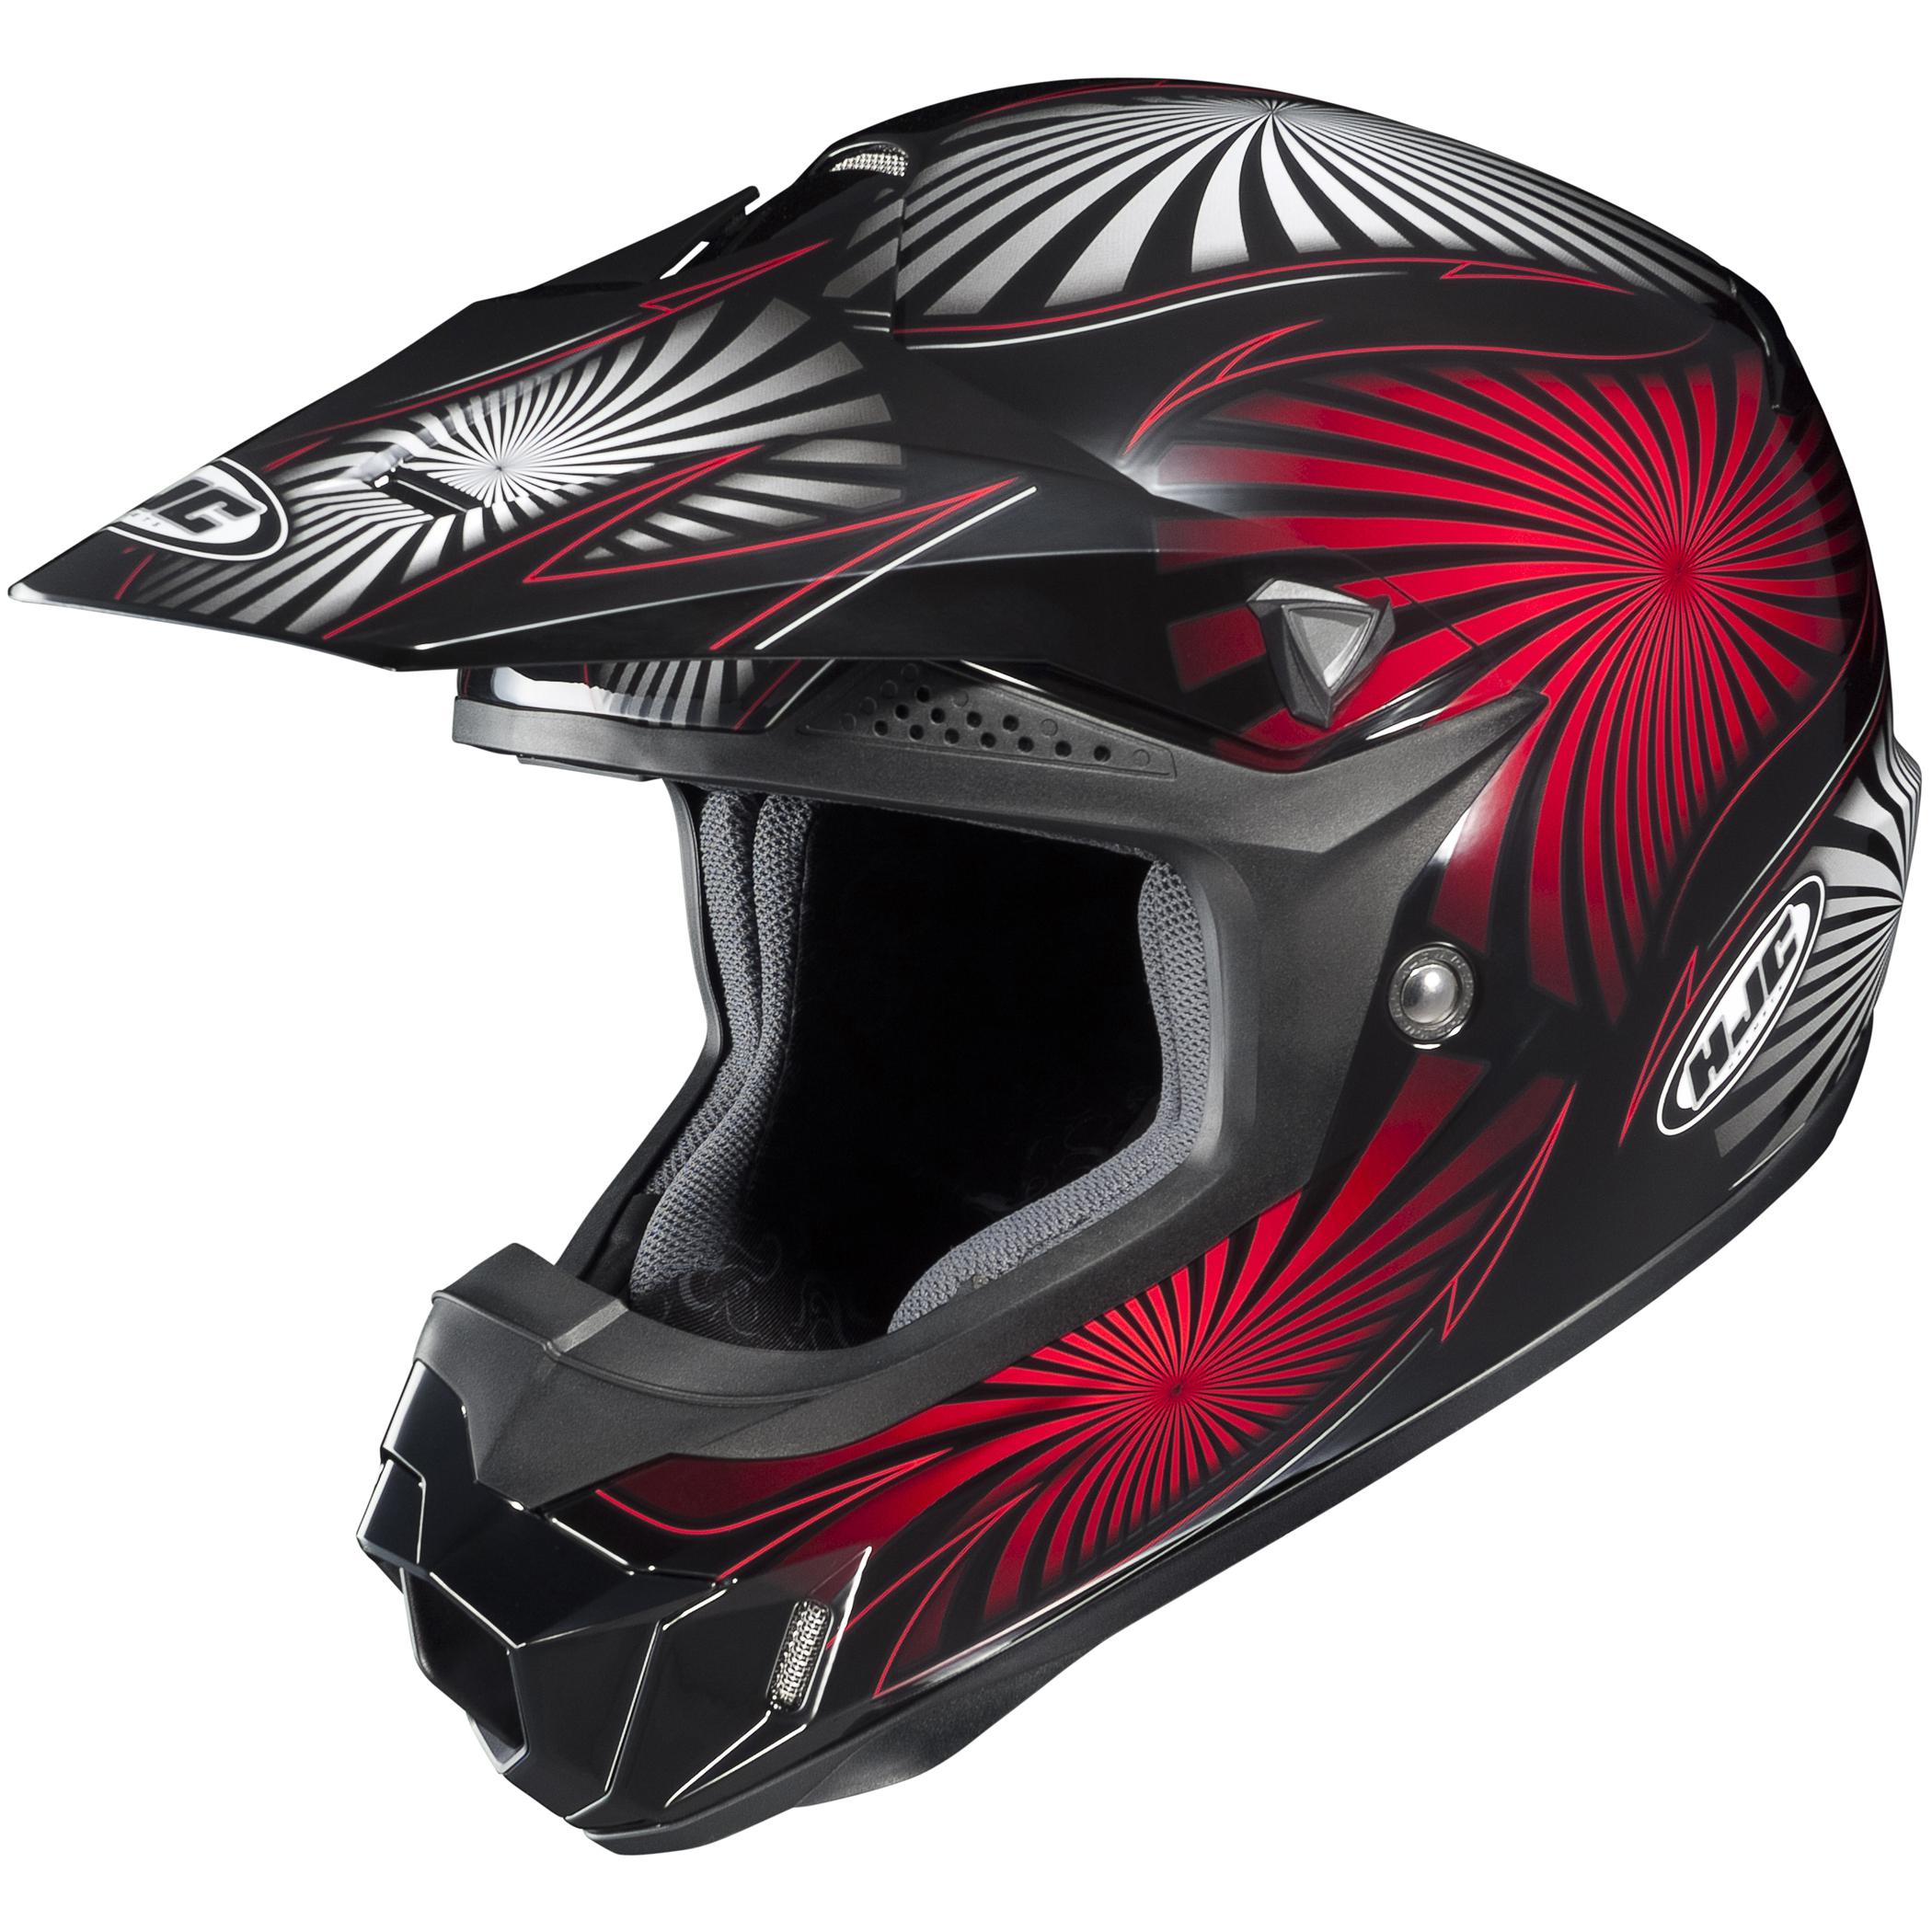 Hjc cl-x6 whirl motorcycle helmet